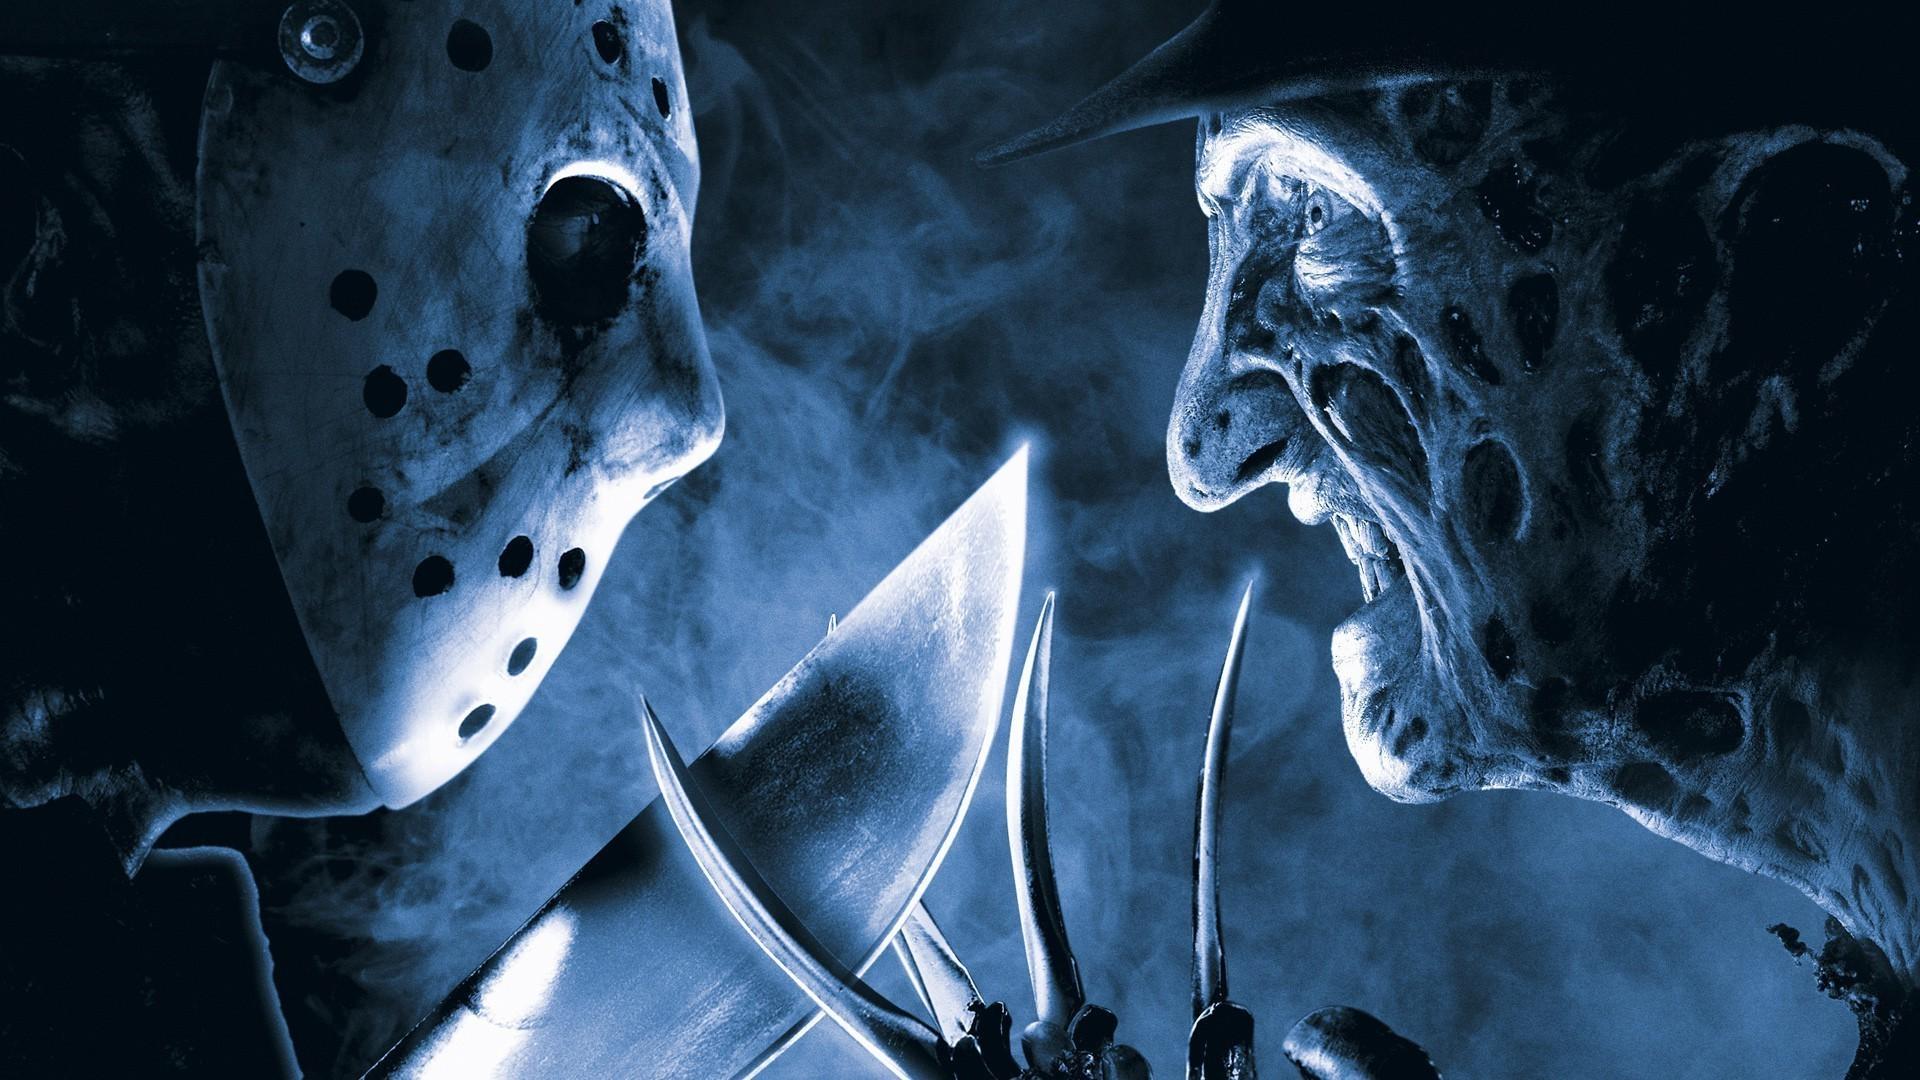 Freddy vs Jason vs Ash WERBLE  Image in Motion Video  Horror art  scary Horror movie art Freddy krueger art